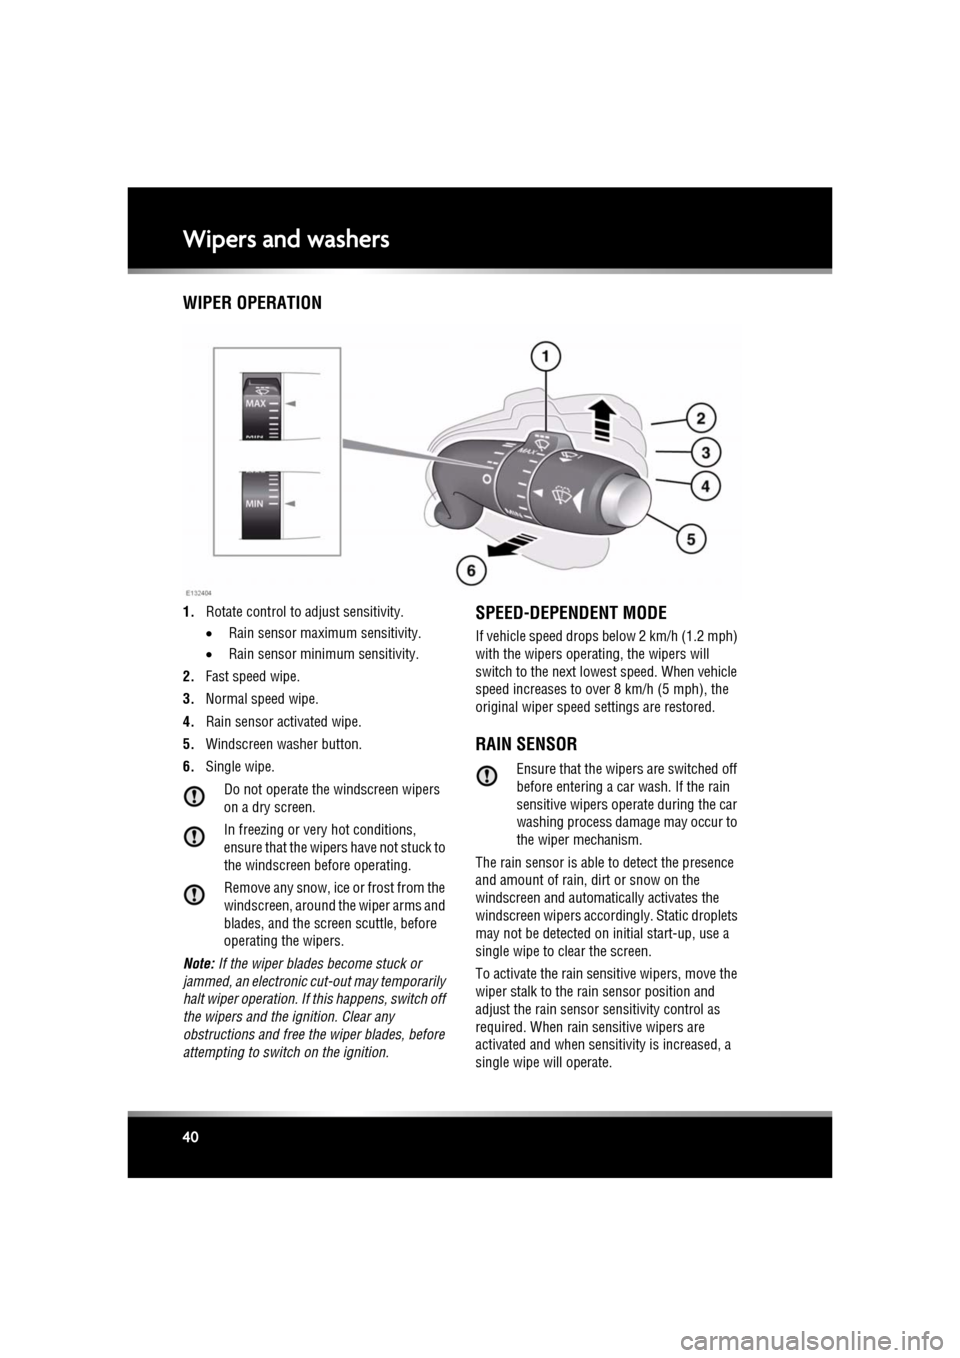 JAGUAR XF 2011 1.G Owners Manual L
(FM8) SEMCON JLR OWNER GUIDE VER 1.00  EURO
LANGUAGE: english-en; MARQUE: jaguar; MODEL: XF
Wipers and washers
40
Wipers and washersWIPER OPERATION
1. Rotate control to adjust sensitivity.
•Rain s